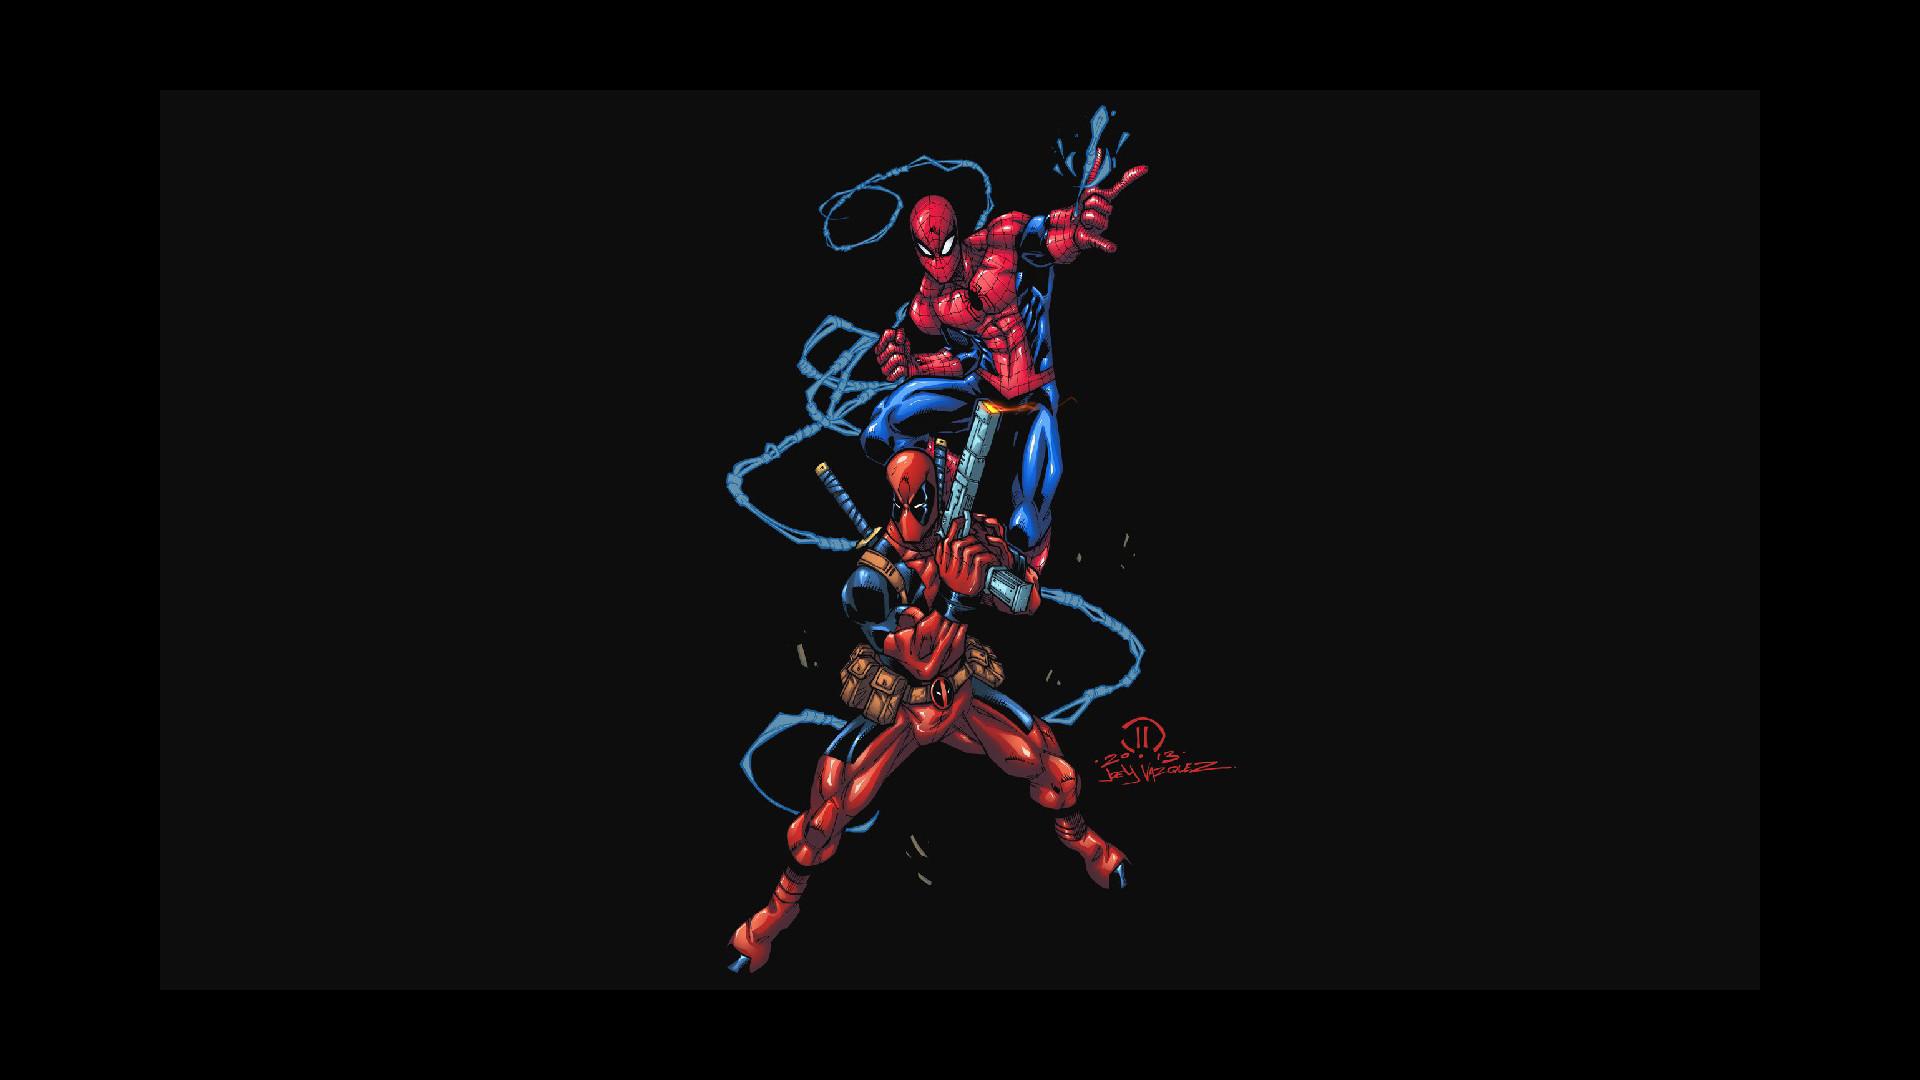 Spiderman iPhone Wallpaper HD